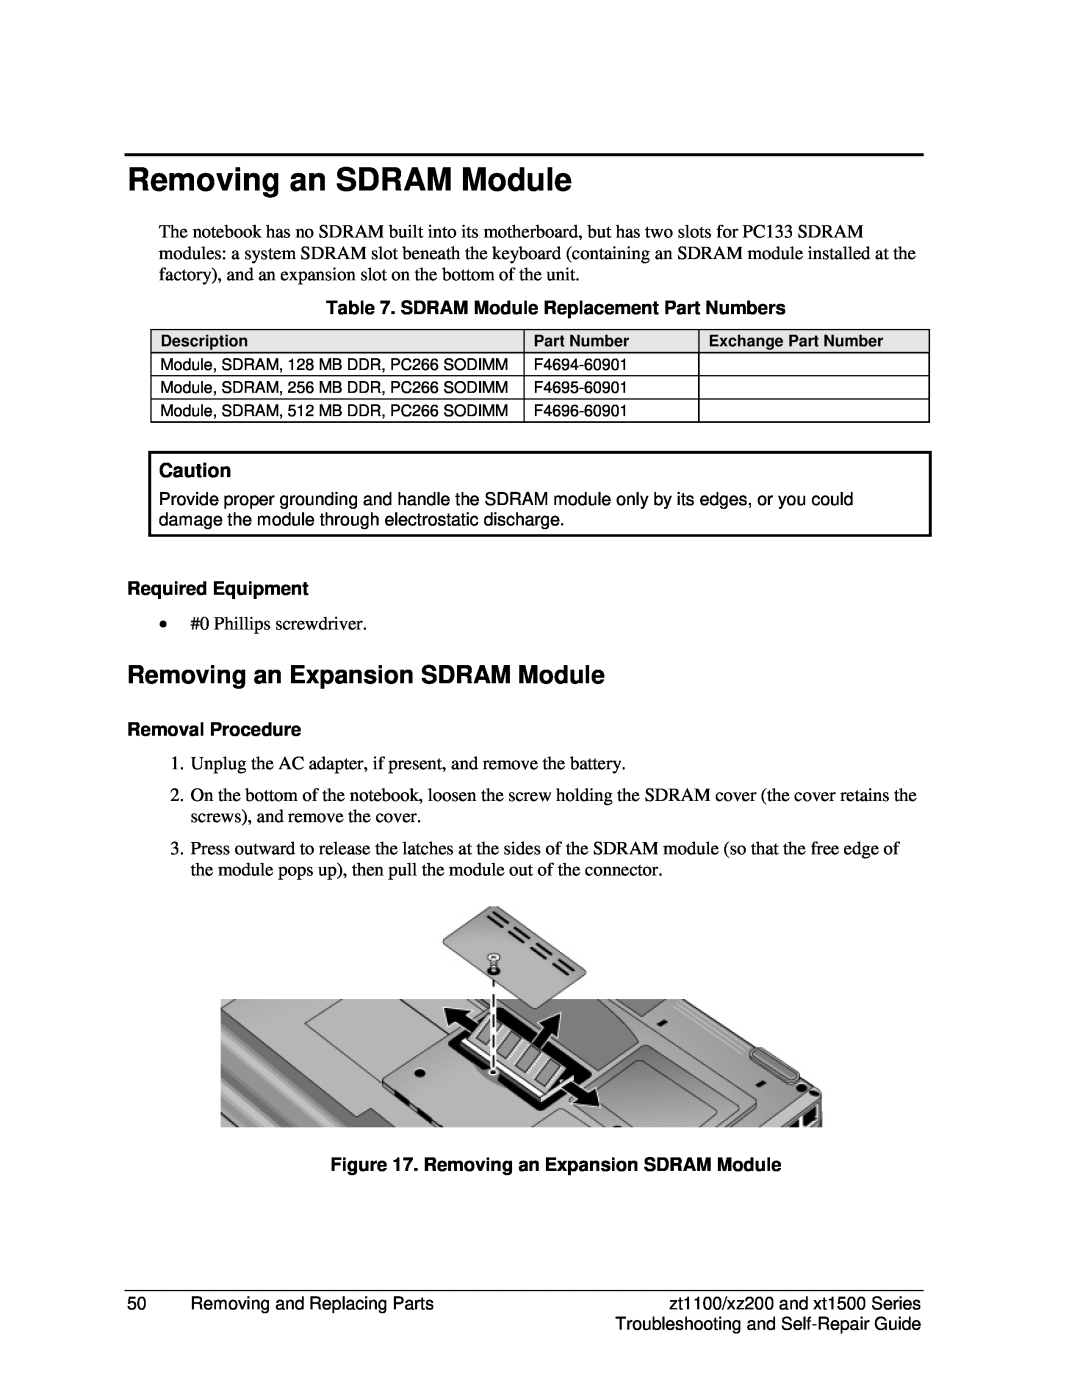 3D Connexion XT1500 Removing an SDRAM Module, Removing an Expansion SDRAM Module, SDRAM Module Replacement Part Numbers 